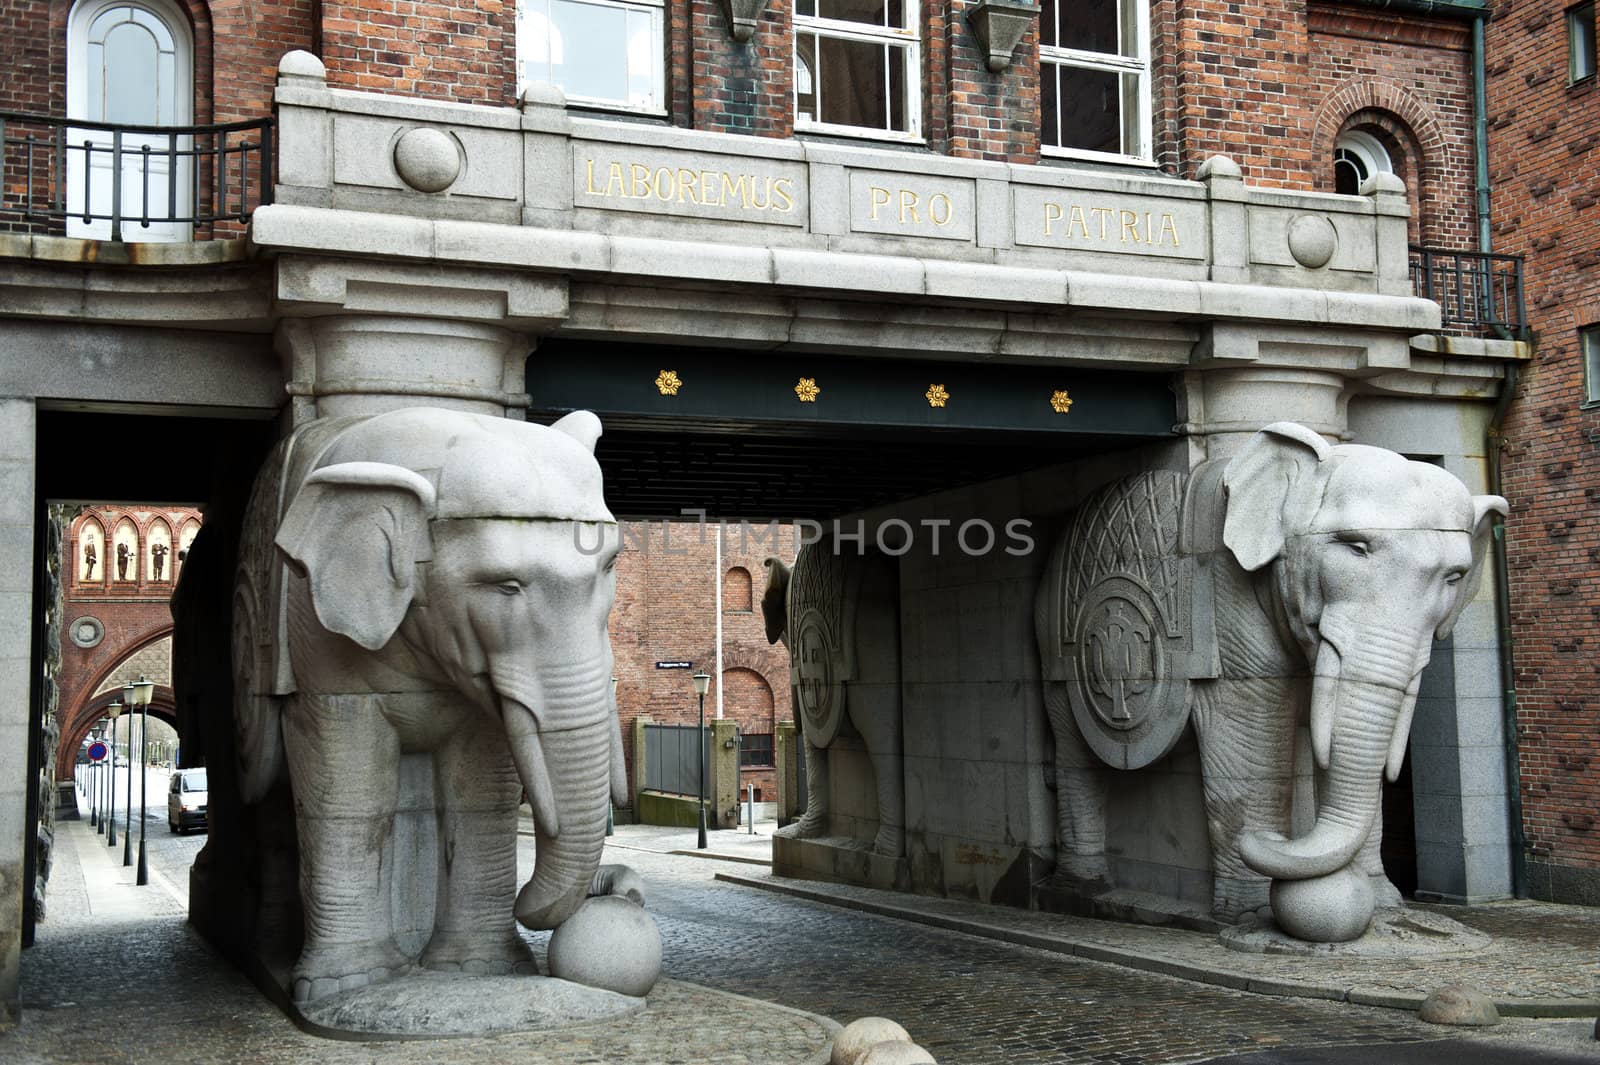 Carlsberg's elephant by Alenmax